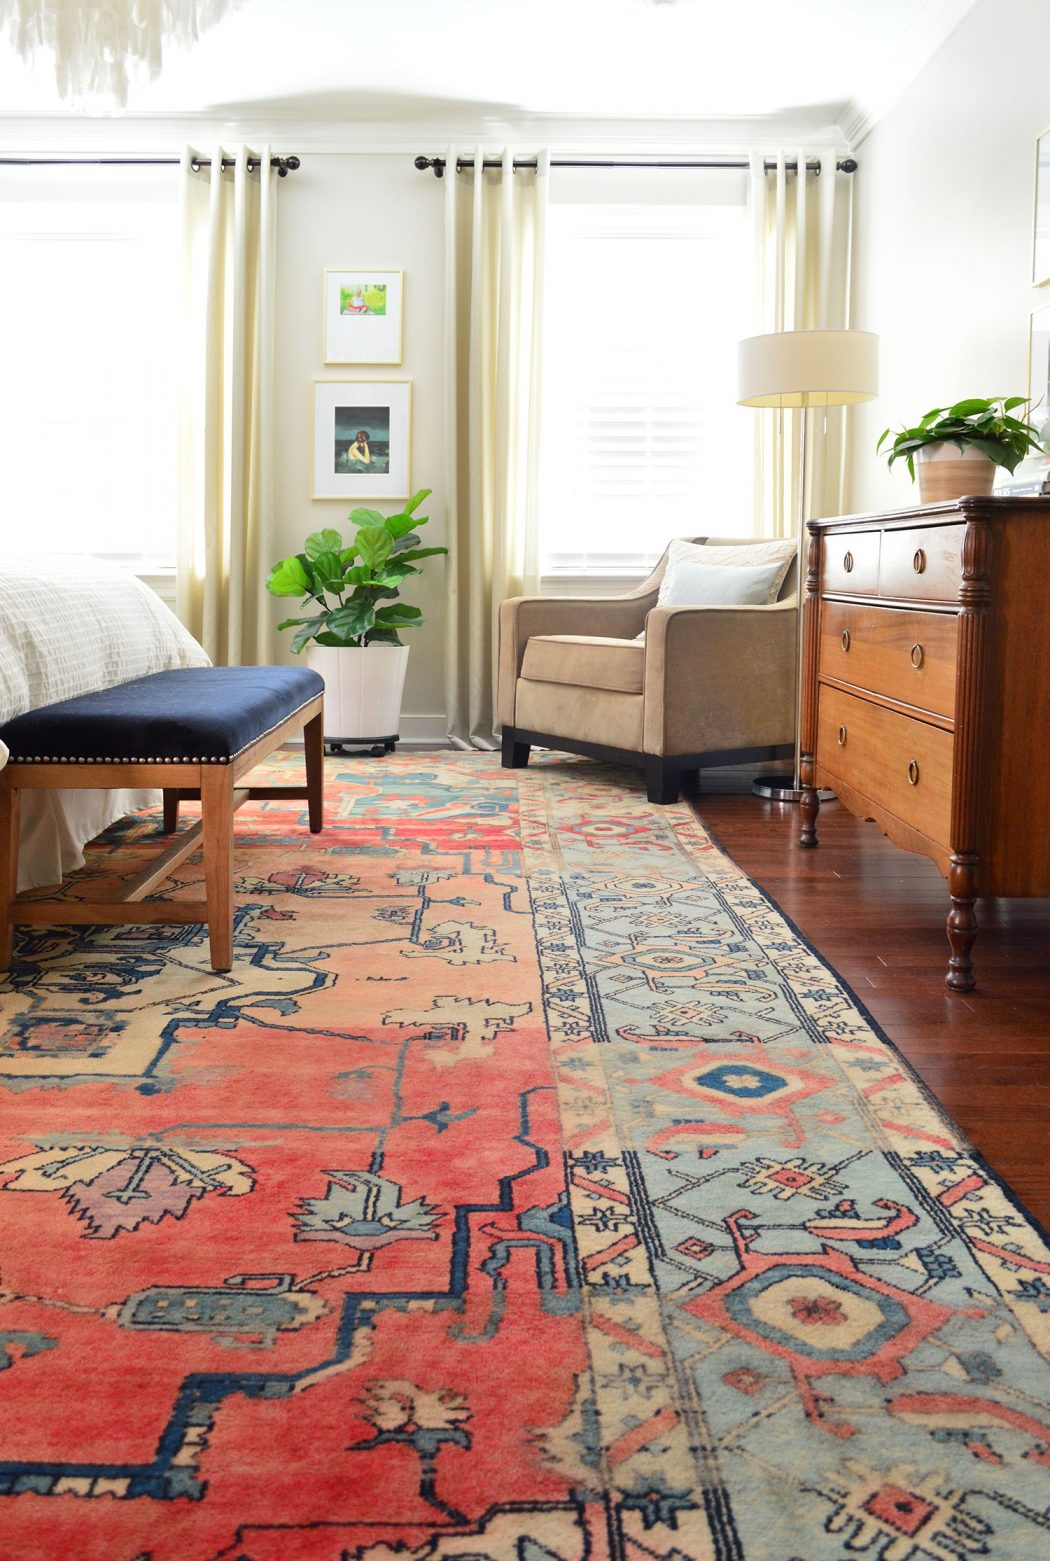 Stitch Love Carpet floor area rug - home decor - Bedroom Living